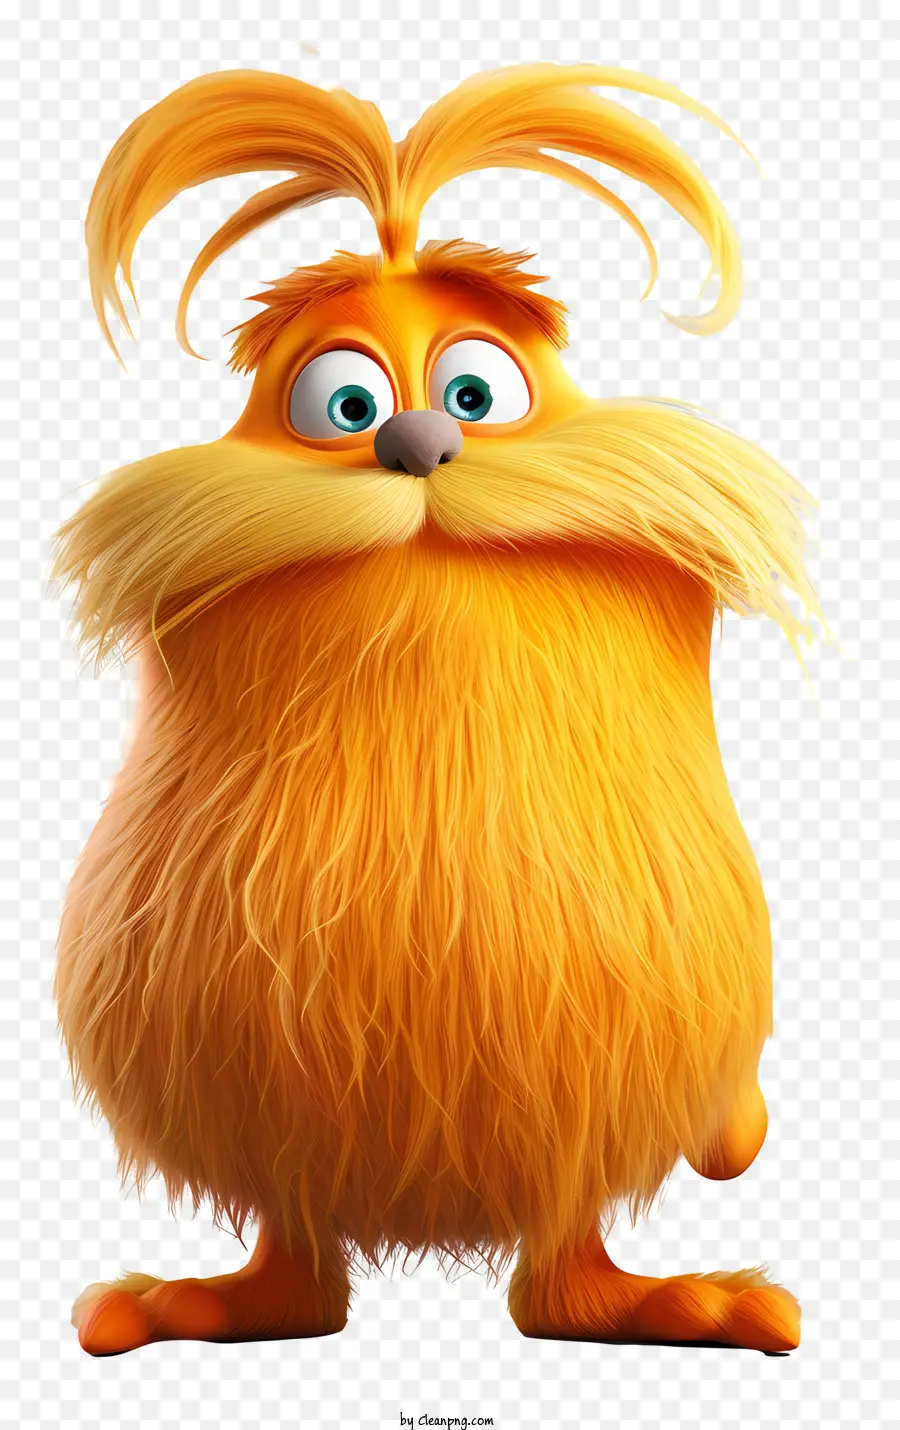 lorax dr. seuss the lorax cartoon character orange creature